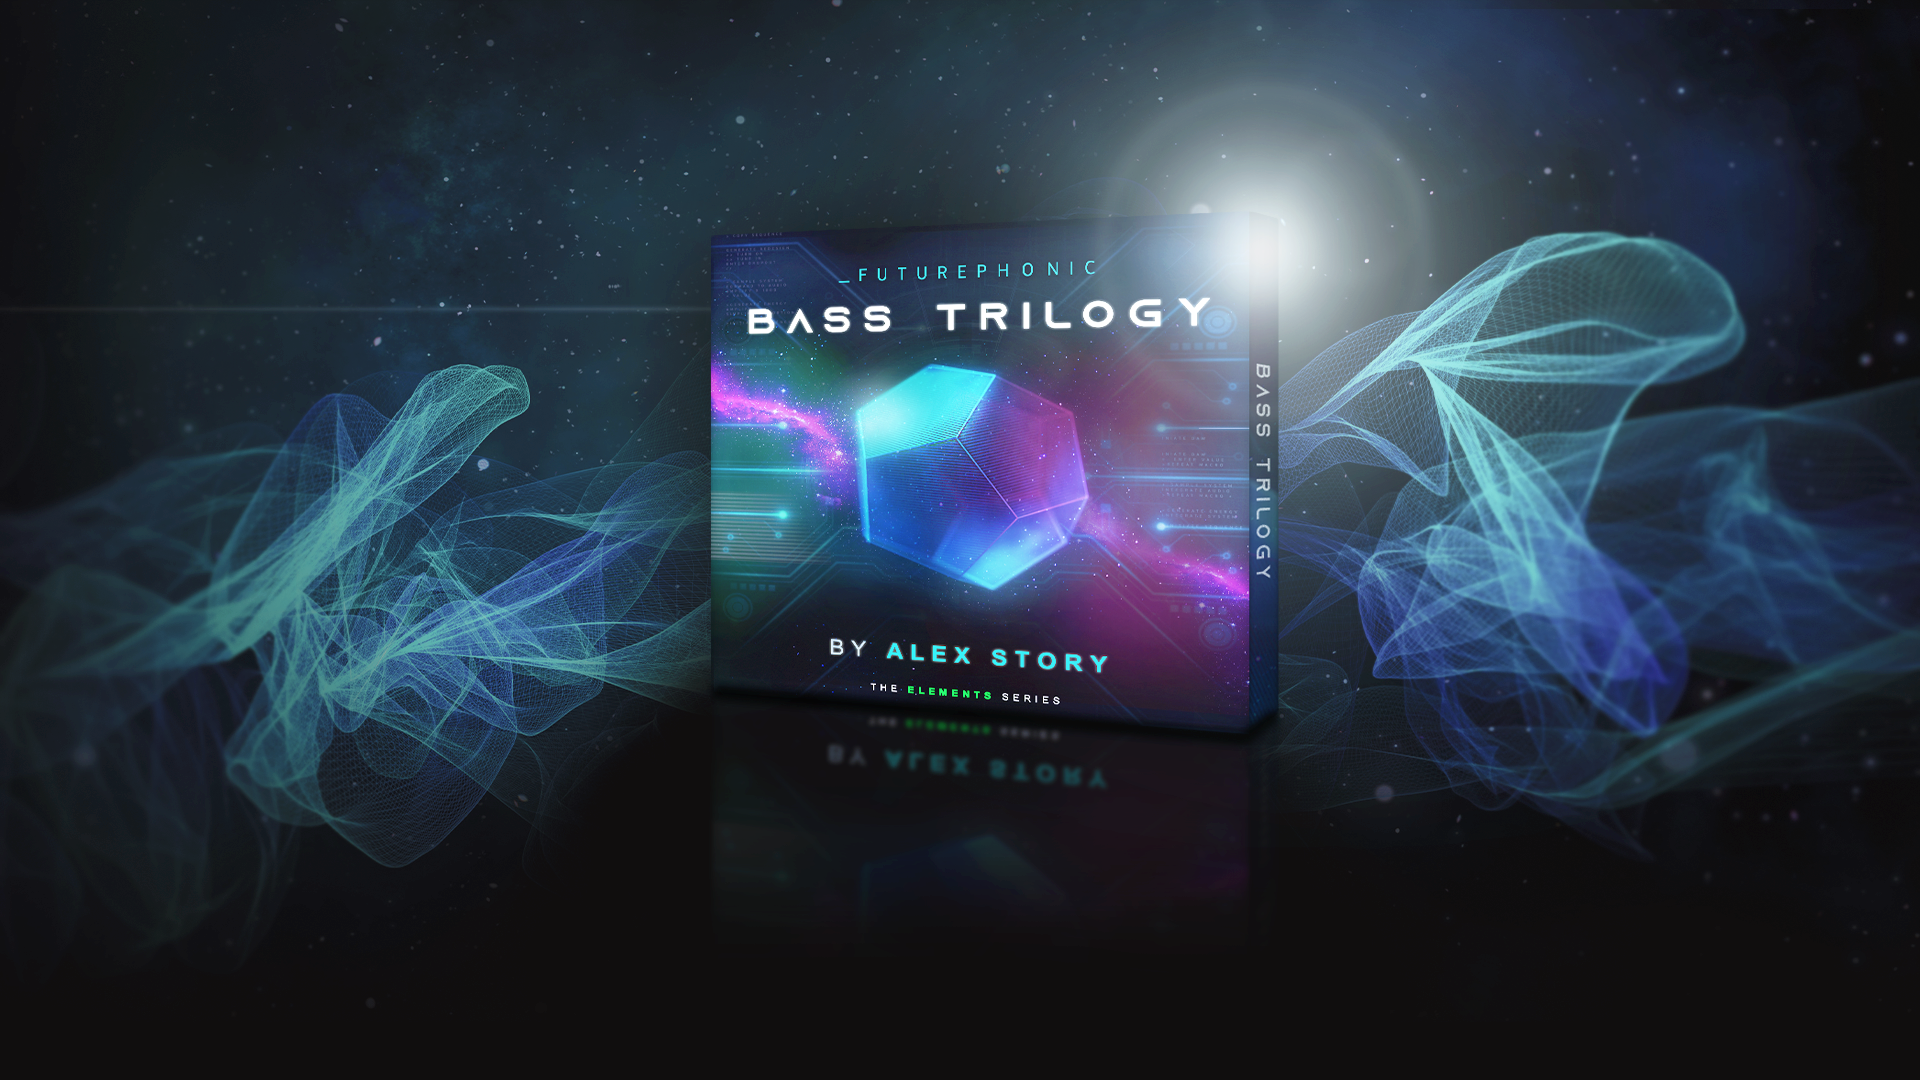 Bass Trilogy by Alex Story - Futurephonic